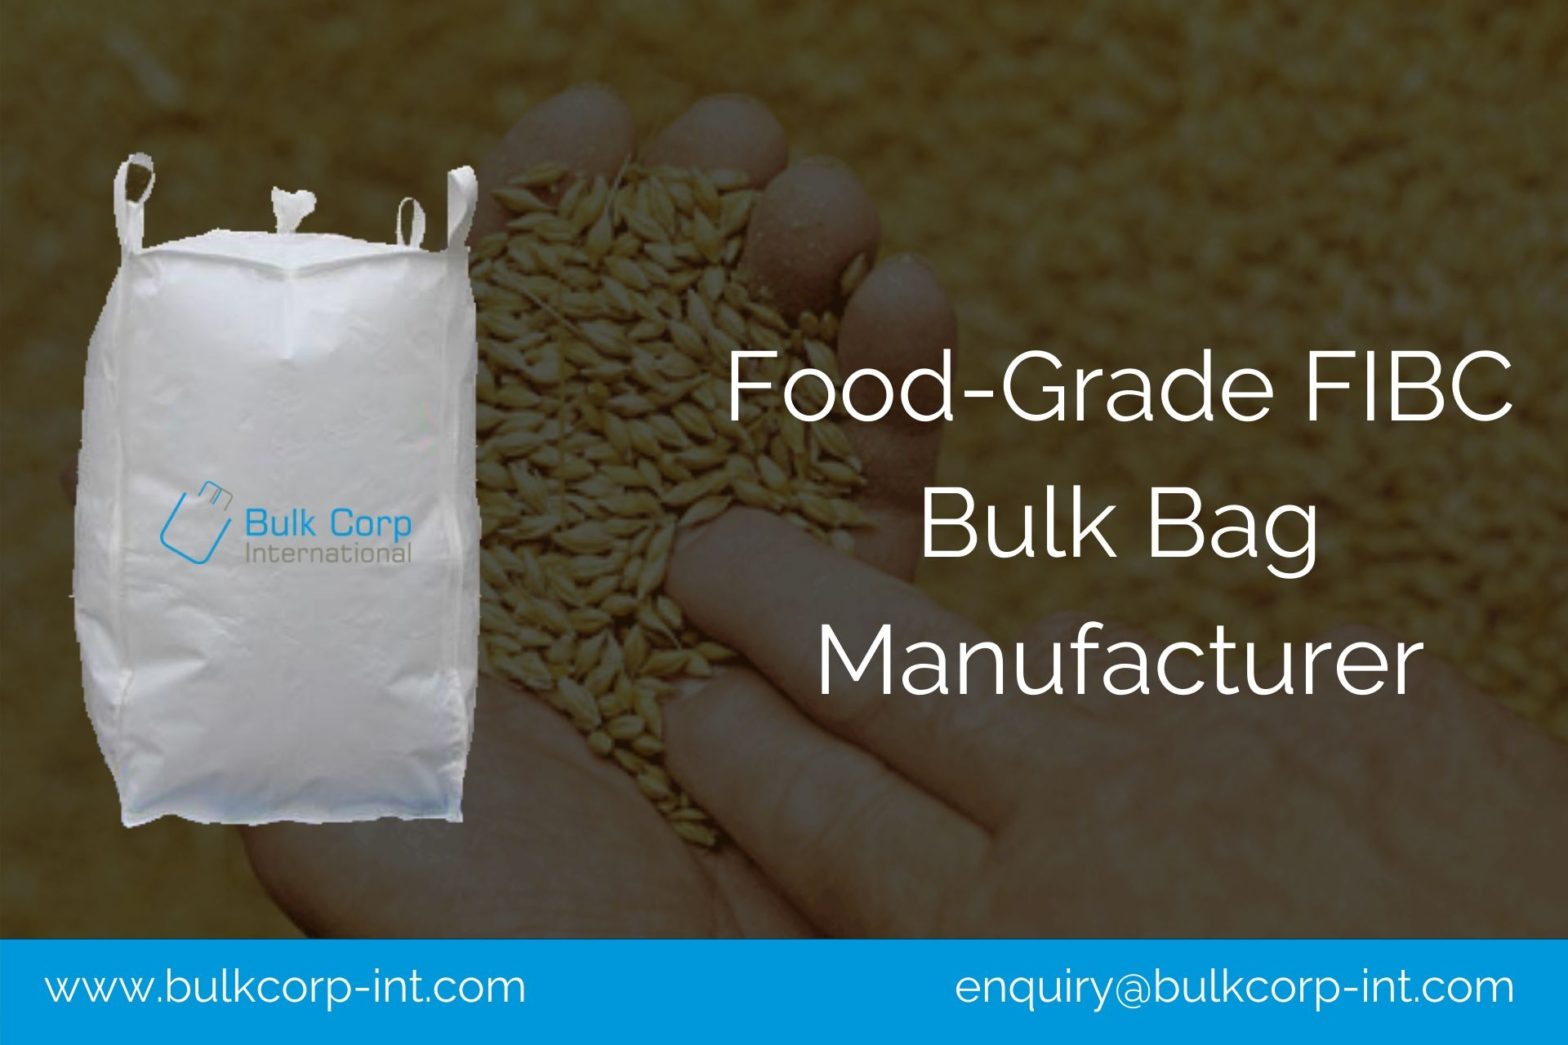 Food-Grade FIBC Bulk Bag Manufacturer